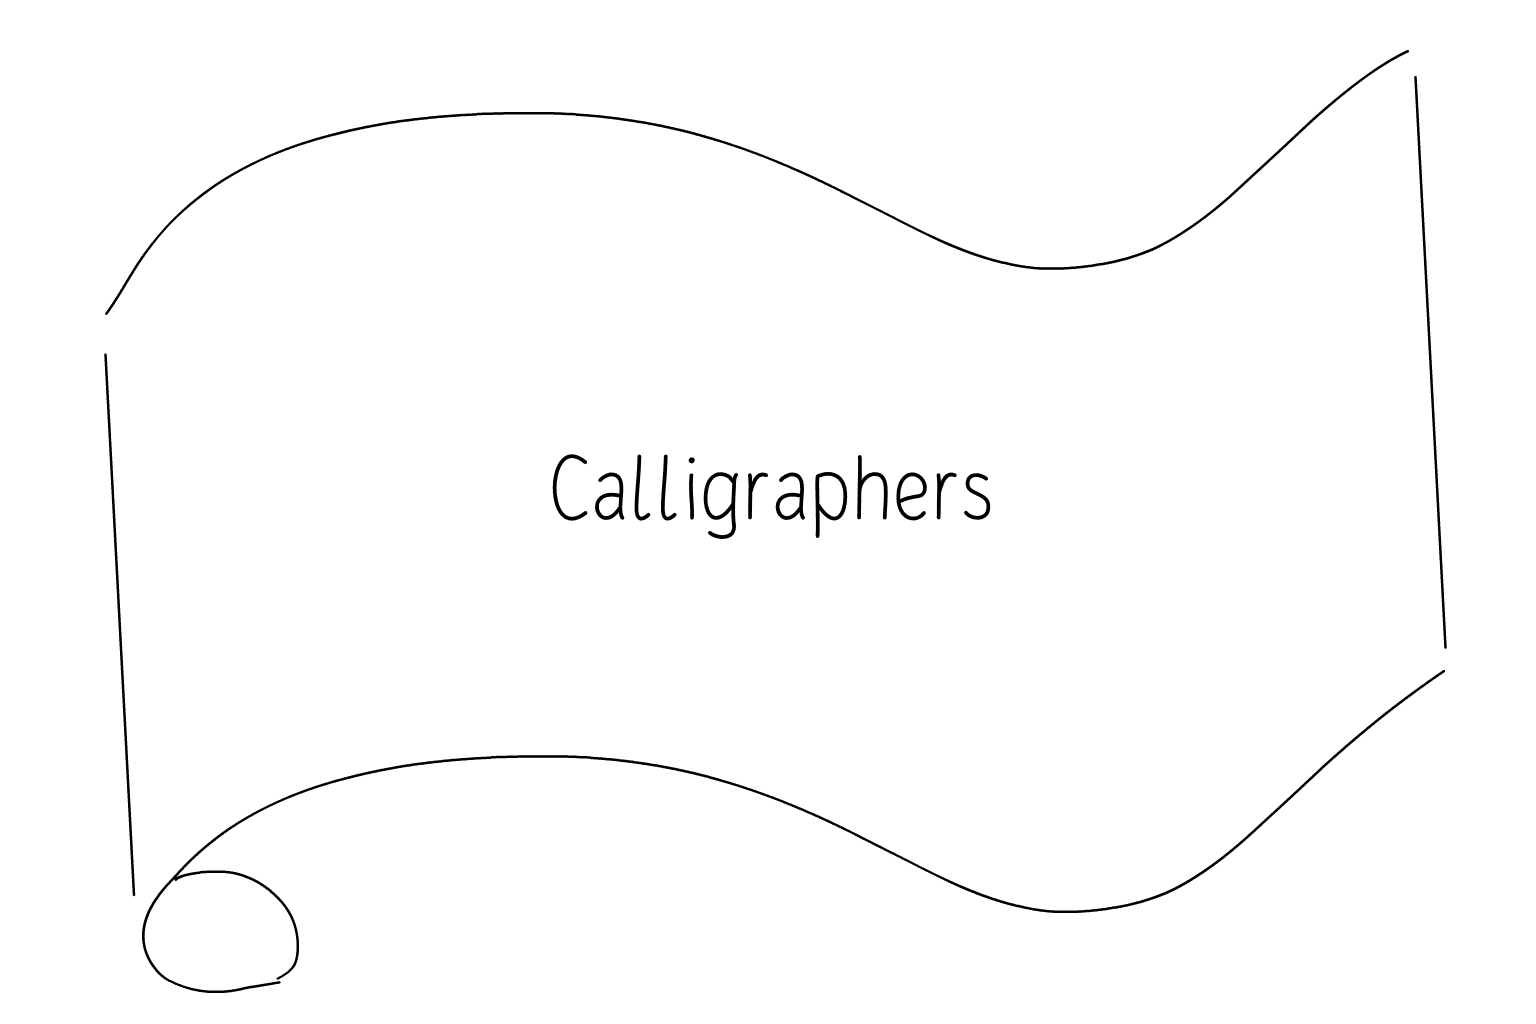 Illustration of Calligraphers